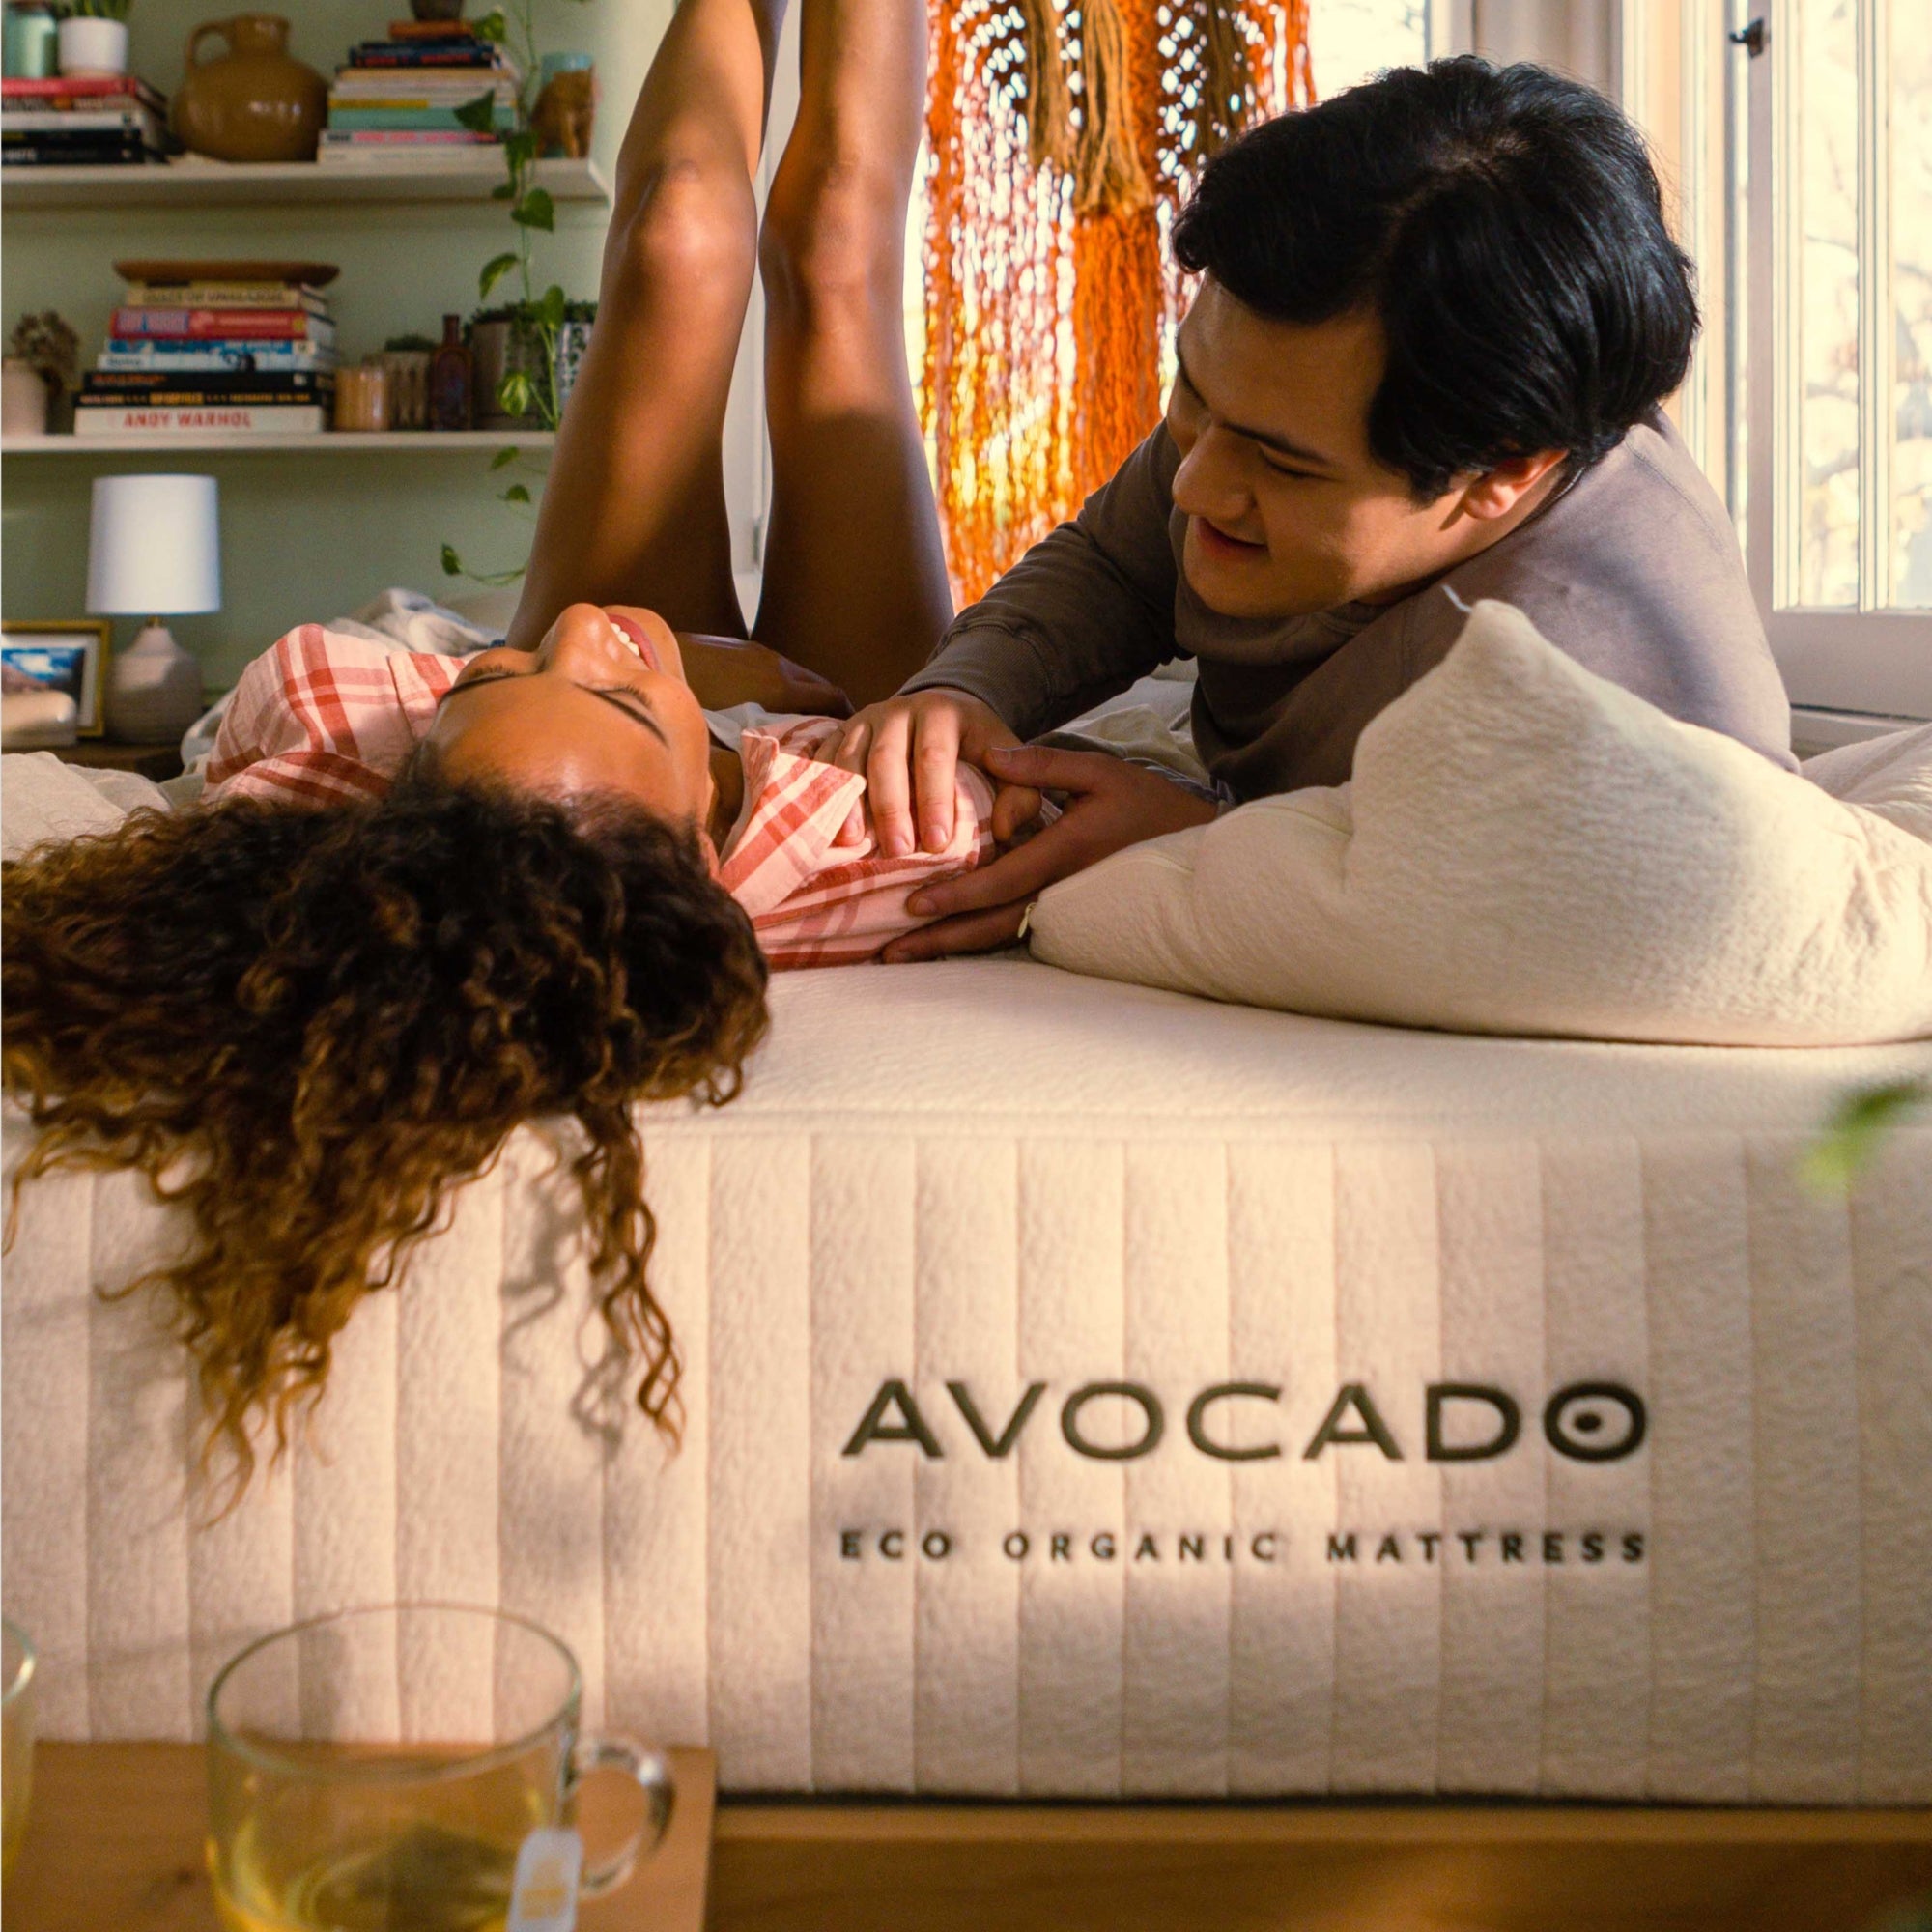 eco organic mattress by avocado